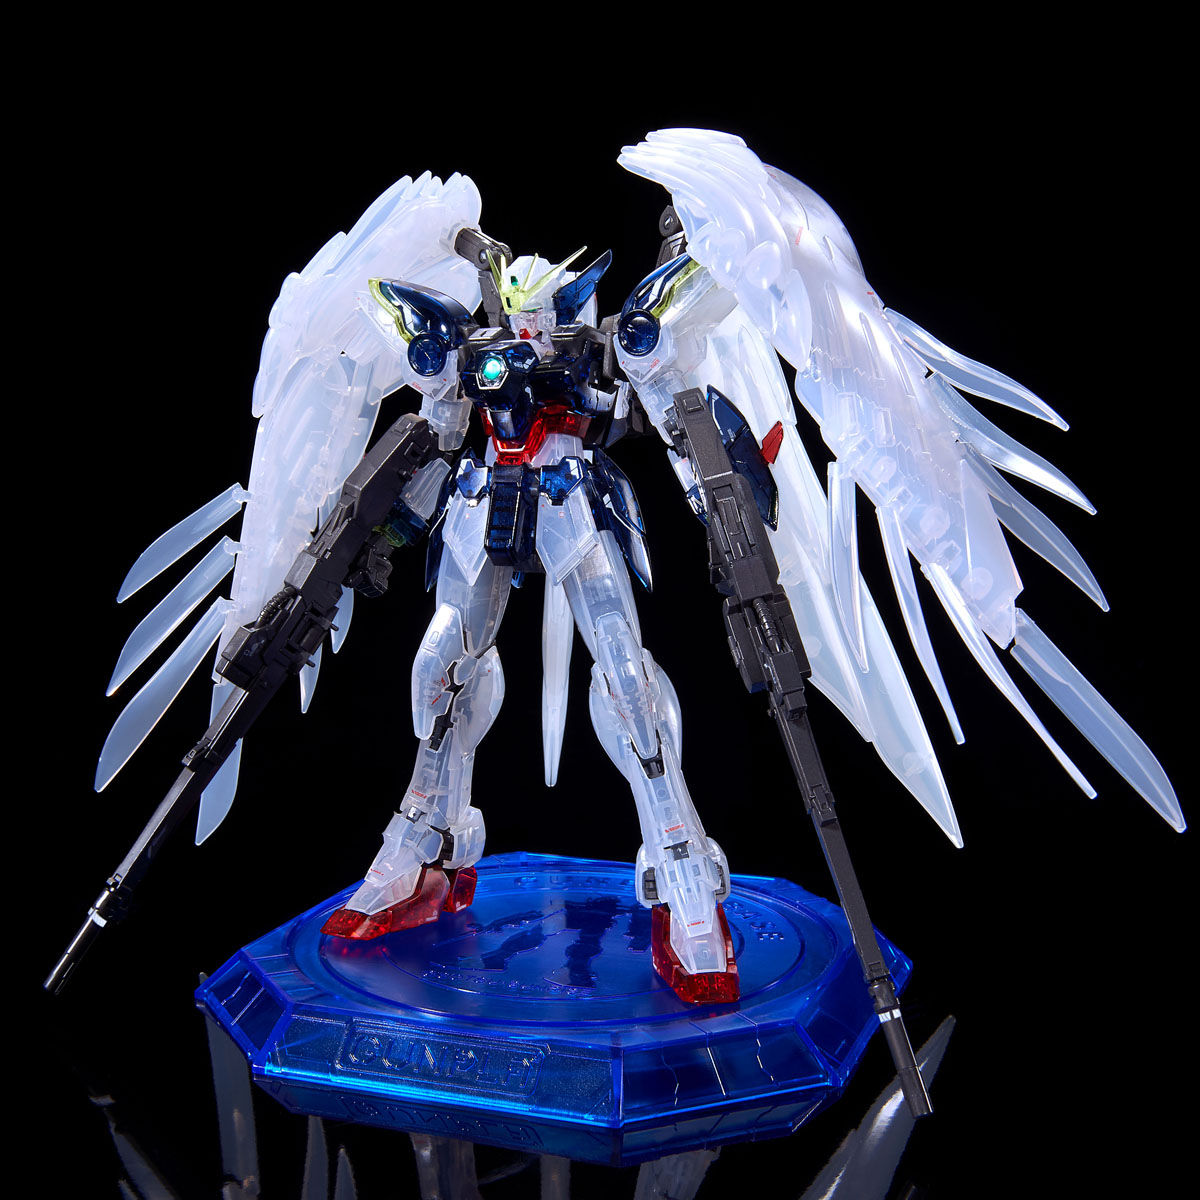 RG 1/144 ガンダムベース東京限定 ウイングガンダムゼロ EW [クリアカラー] “The Gundam Base Tokyo Limited Wing Gundam Zero EW [Clear Color]”